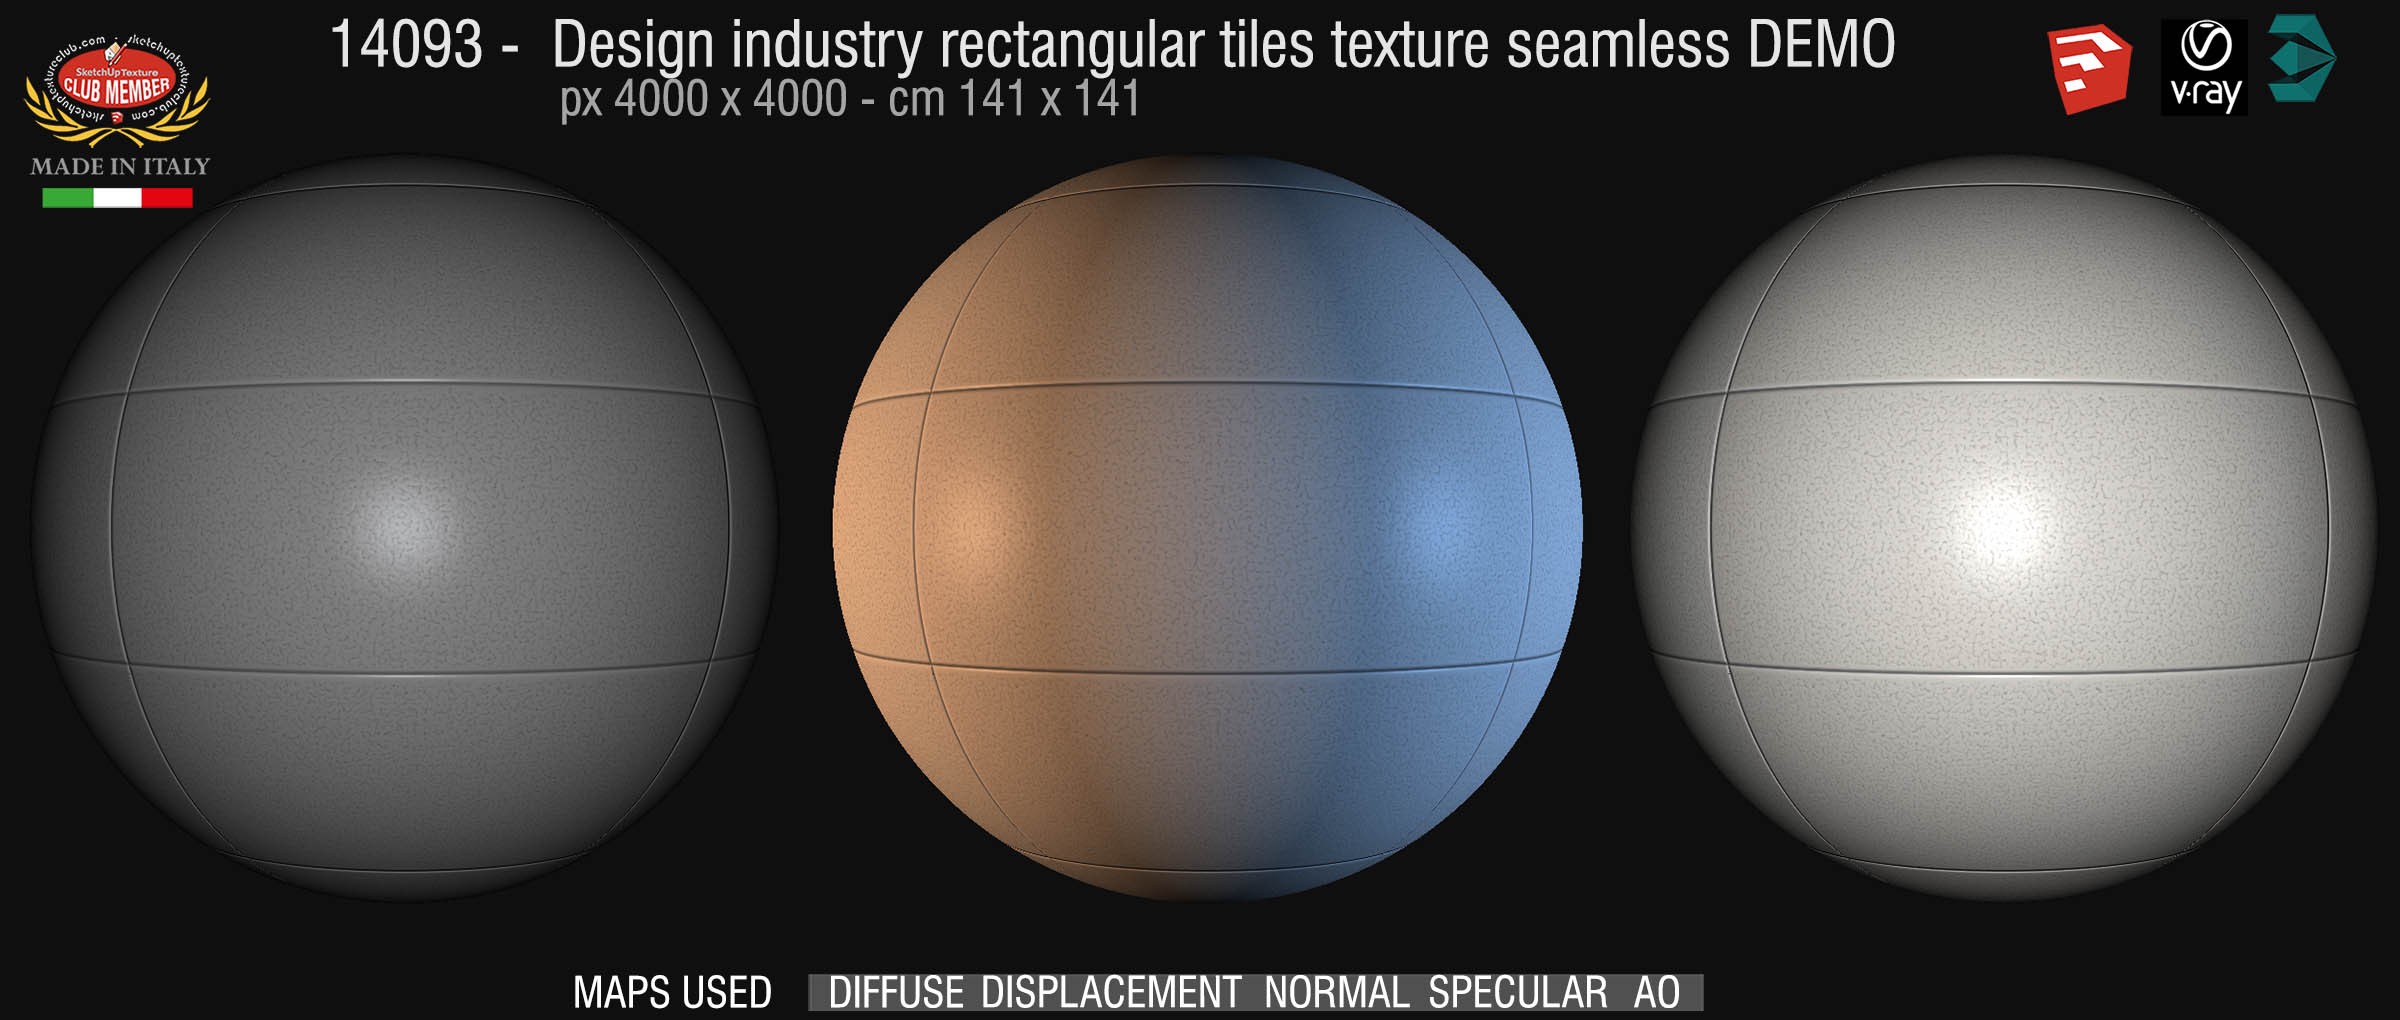 14093 Design industry rectangular tile texture seamless + maps DEMO